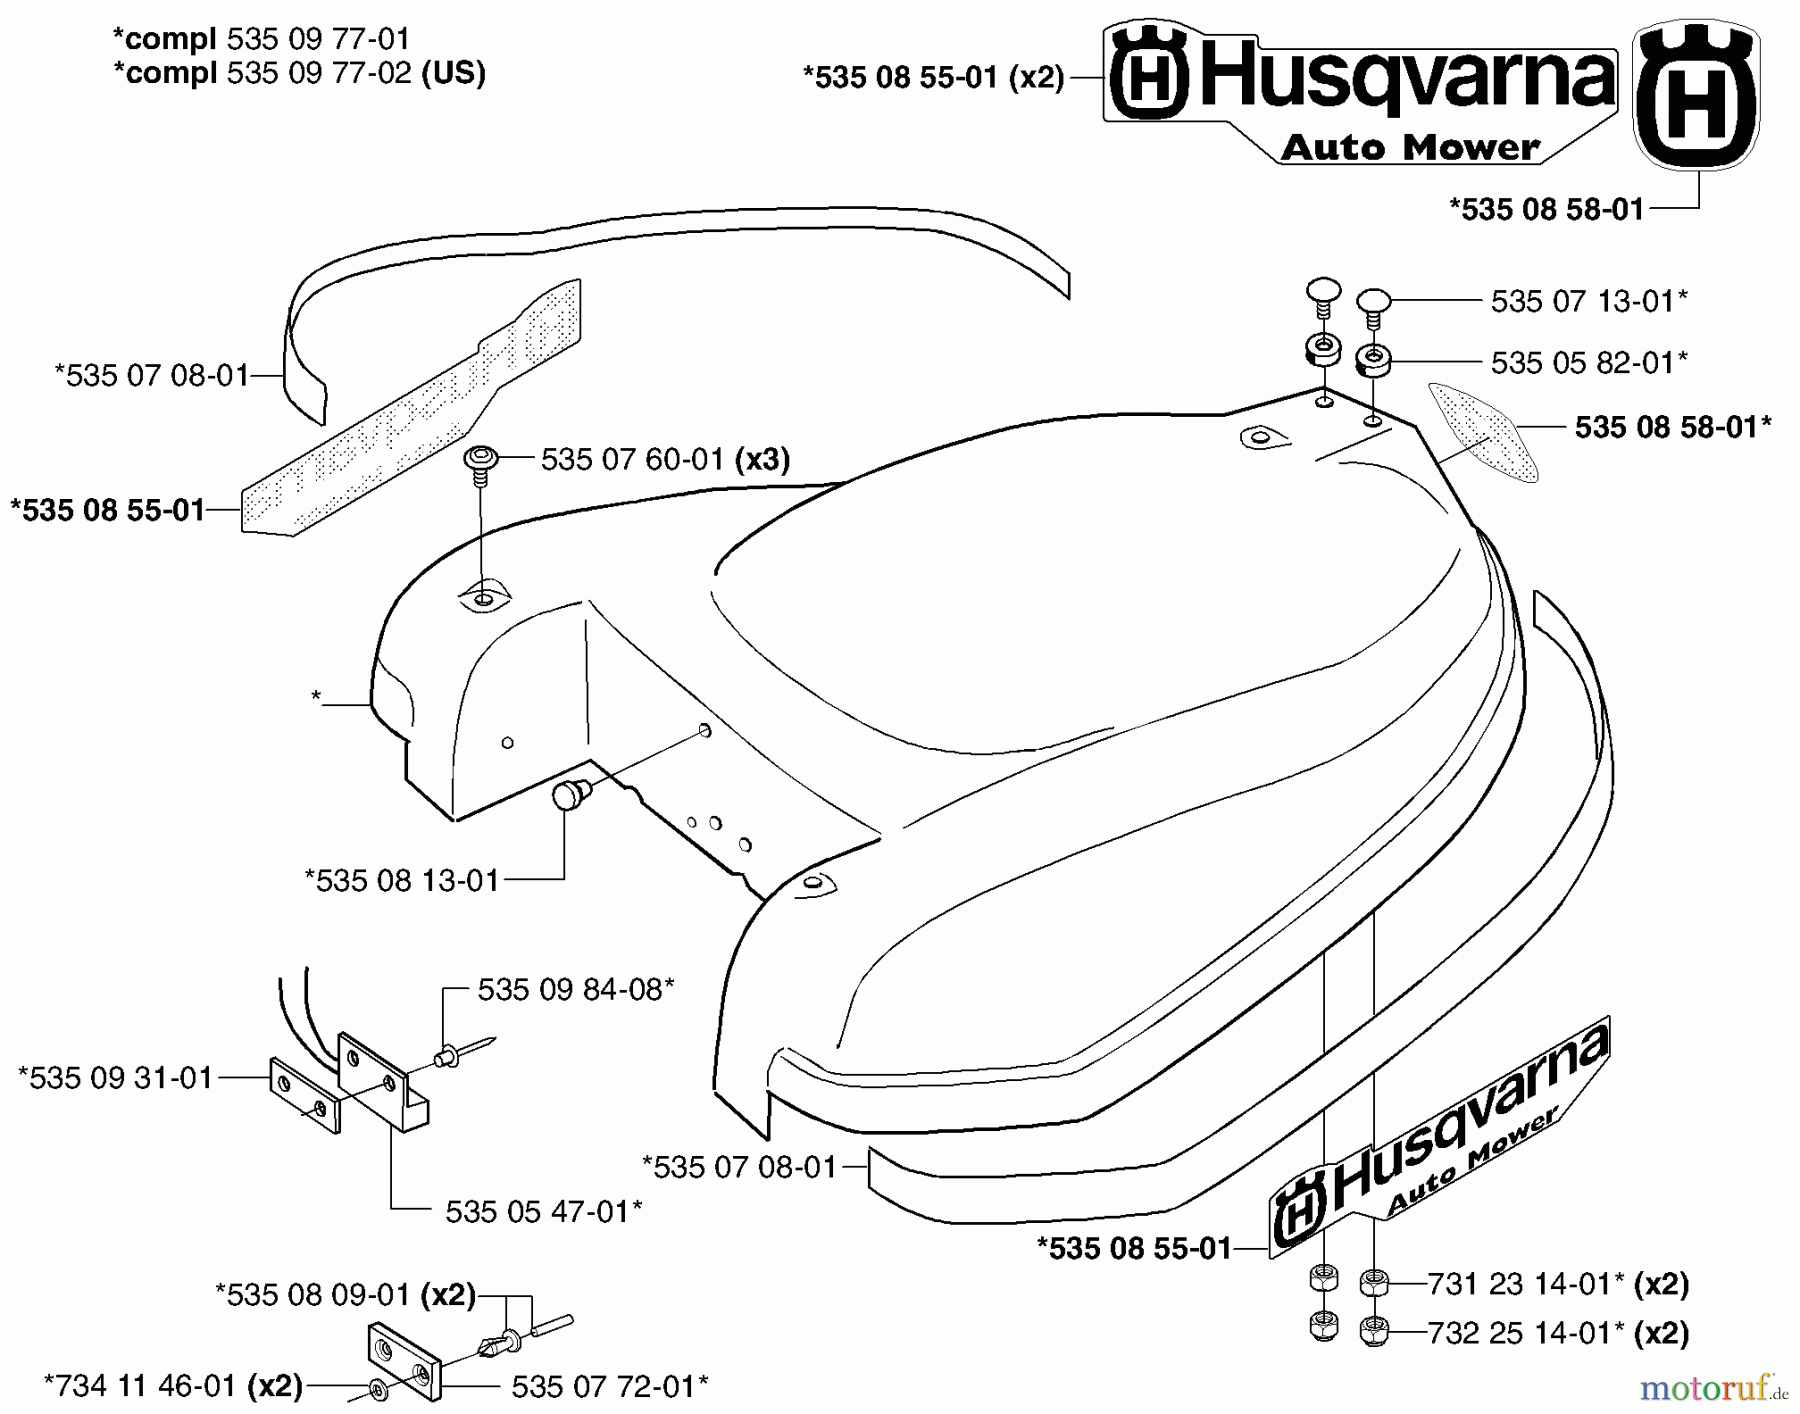  Husqvarna Automower, Mähroboter Husqvarna Auto Mower (2002-02 to 2002-12) Body Assy.